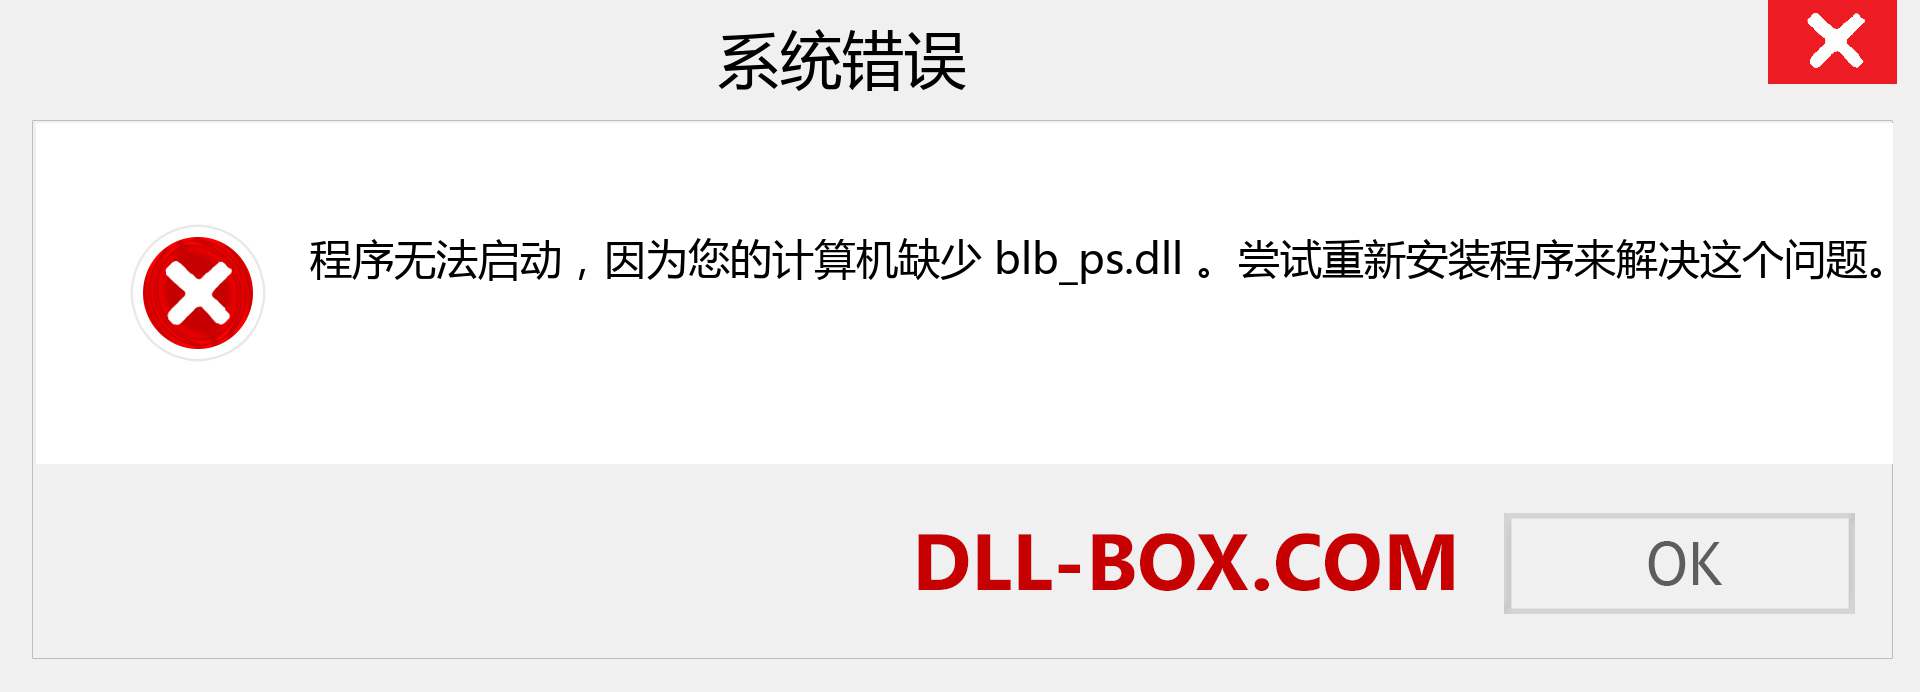 blb_ps.dll 文件丢失？。 适用于 Windows 7、8、10 的下载 - 修复 Windows、照片、图像上的 blb_ps dll 丢失错误